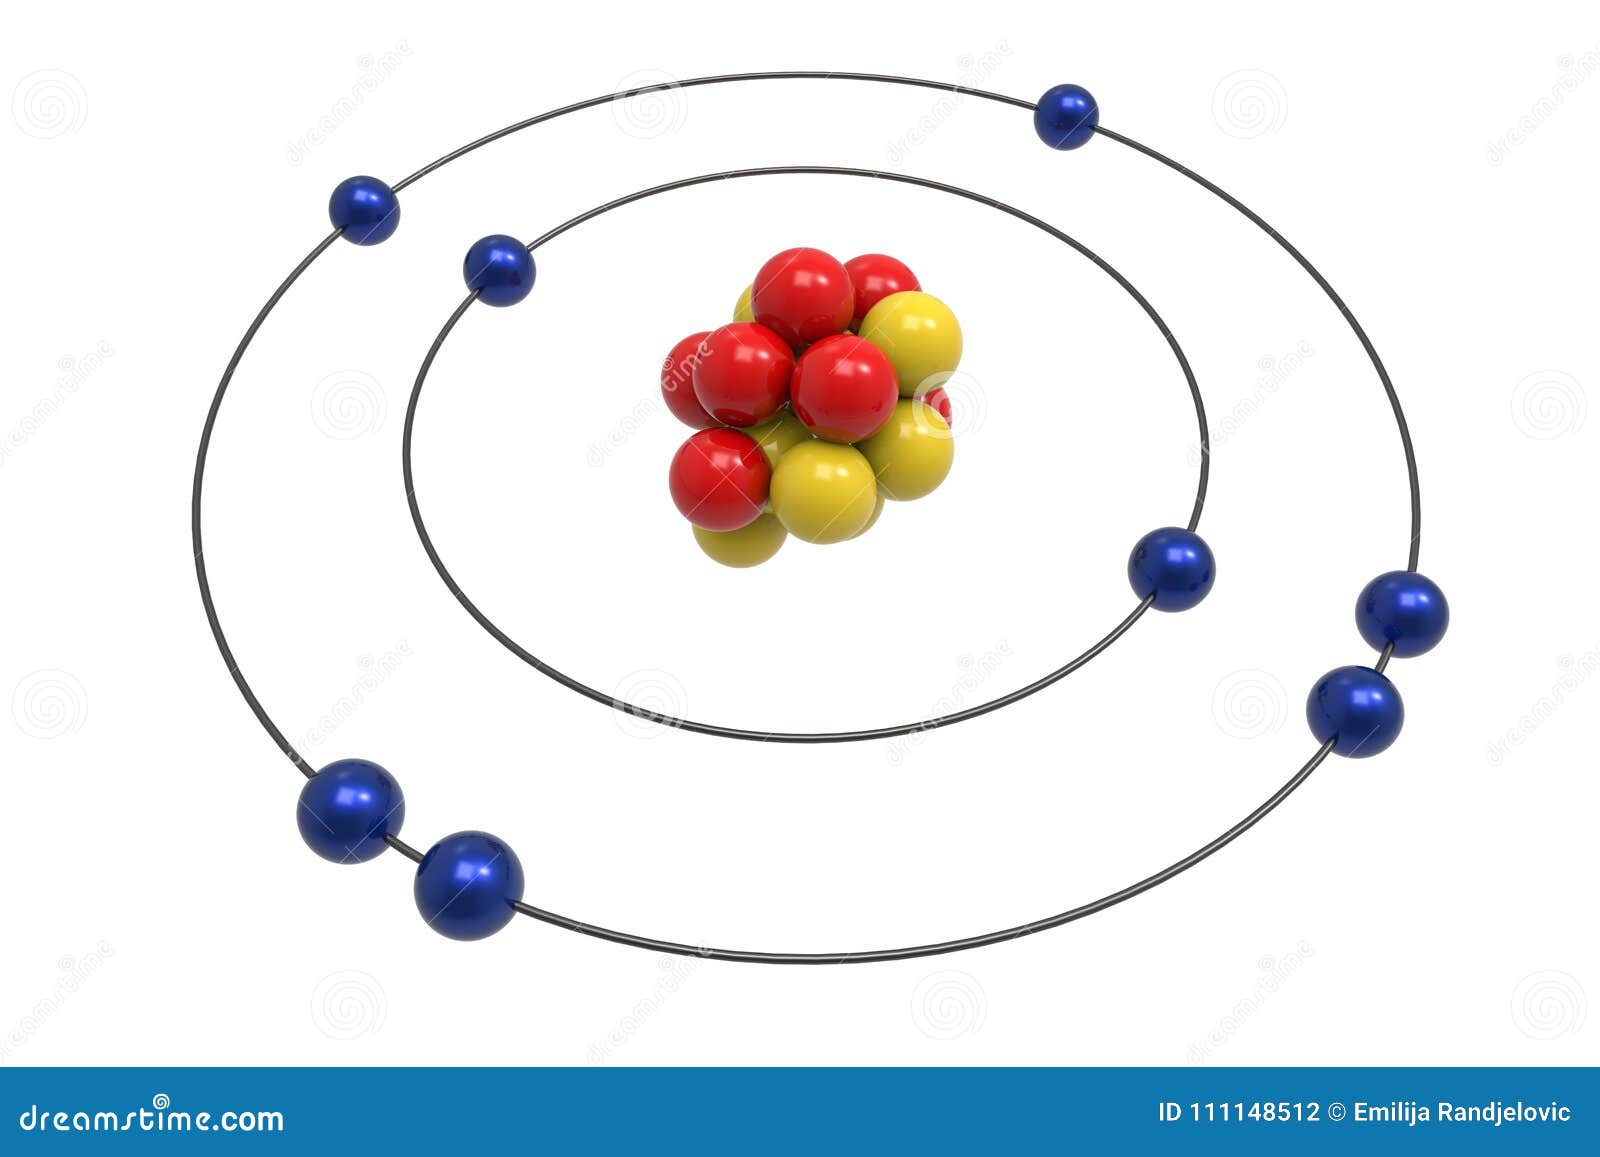 Top 39+ imagen modelo atómico de bohr oxigeno